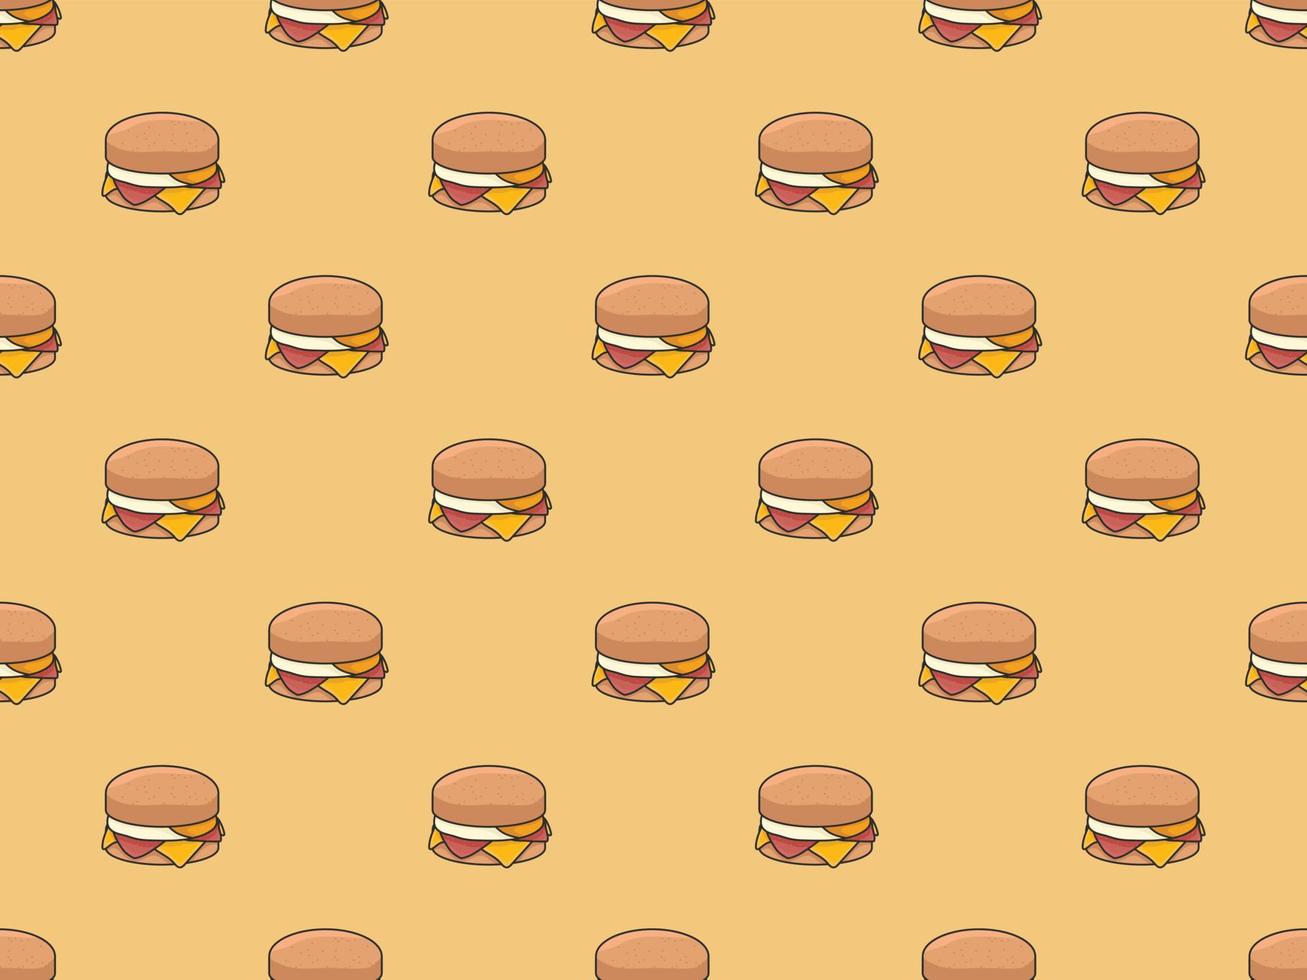 egg burger seamless art modern pattern background element flat doodle cartoon vector illustration